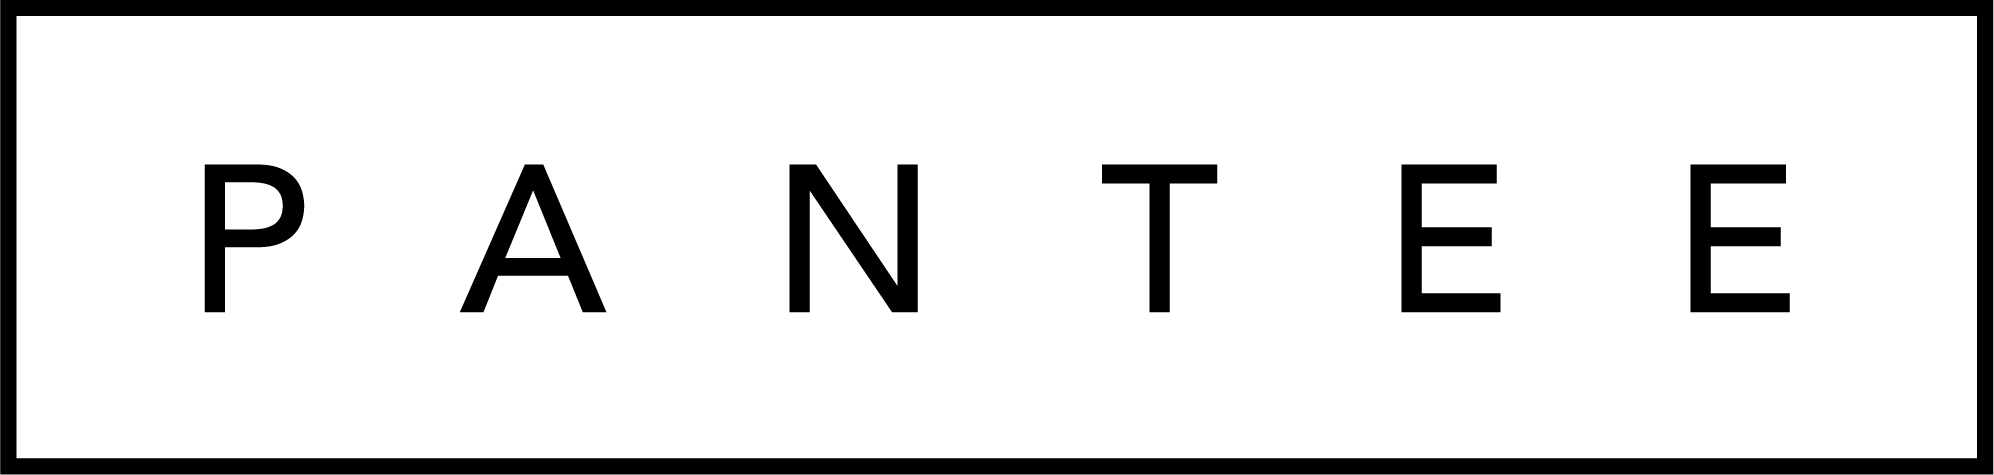 Pantee logo